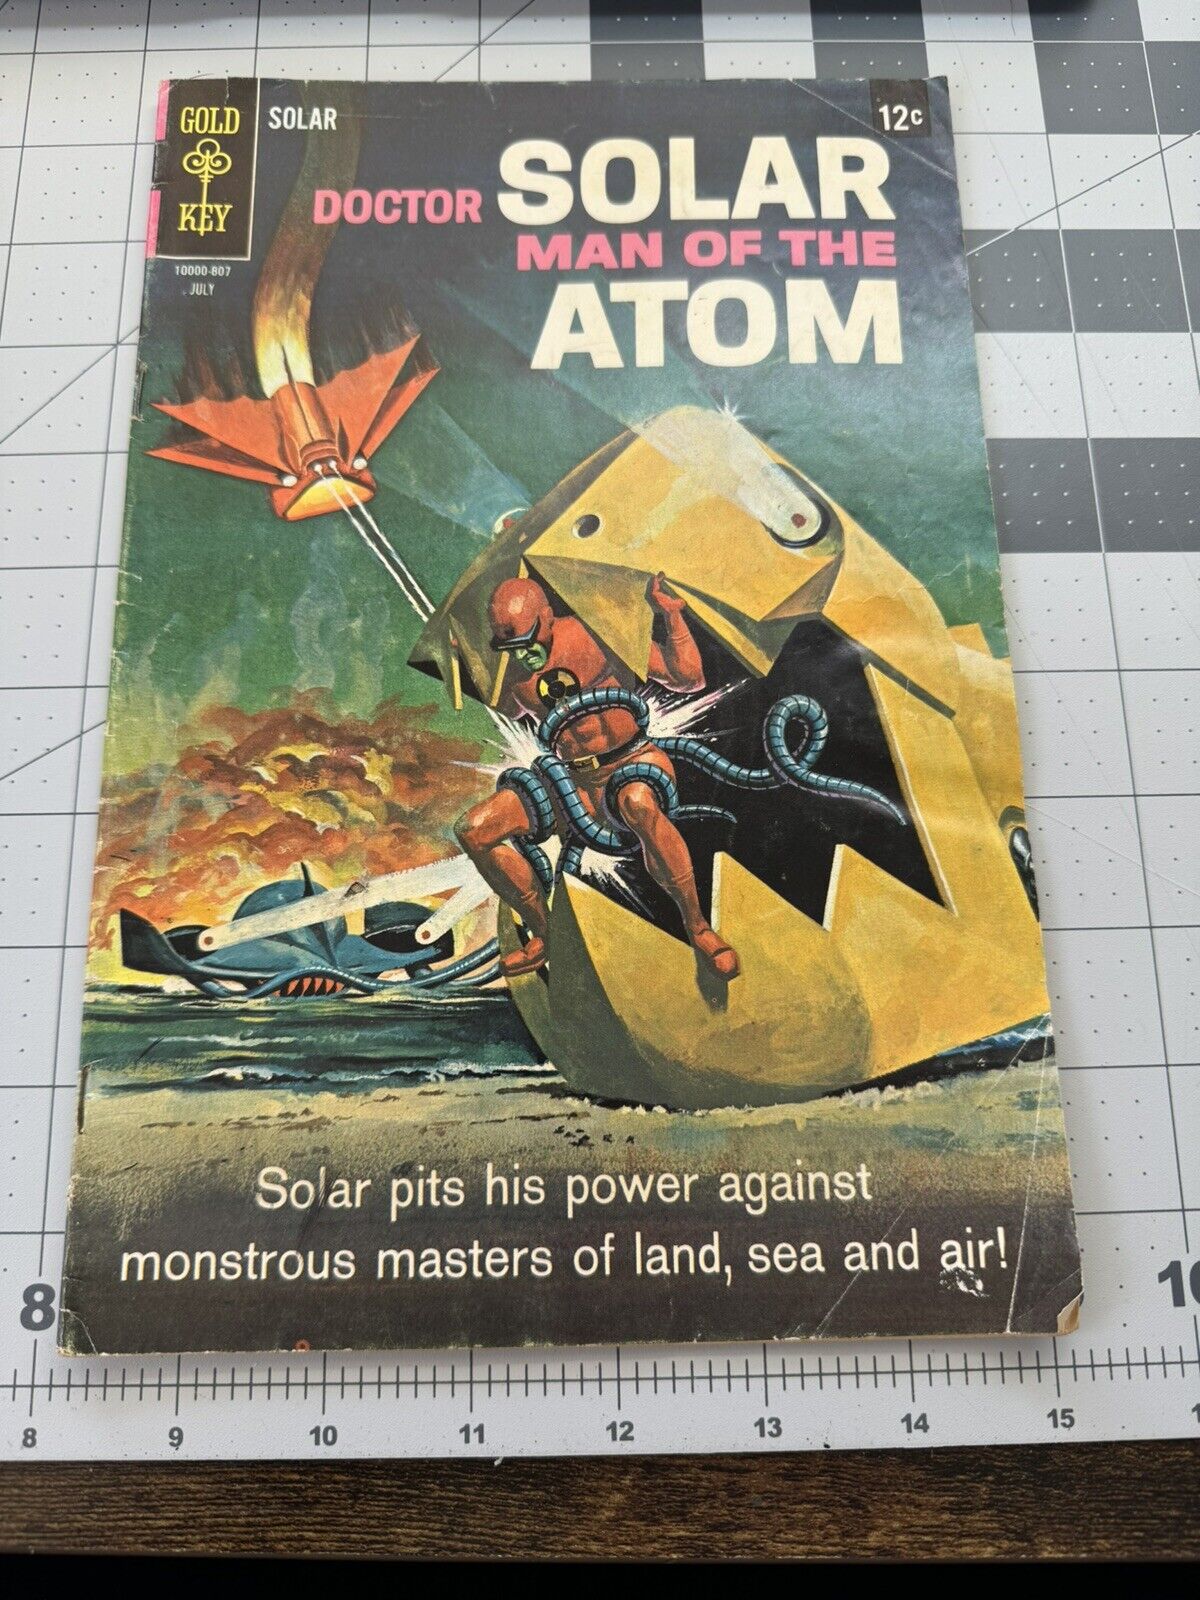 Doctor Solar: Man of Atom #24 (July 1968) Gold Key Comics - VG-